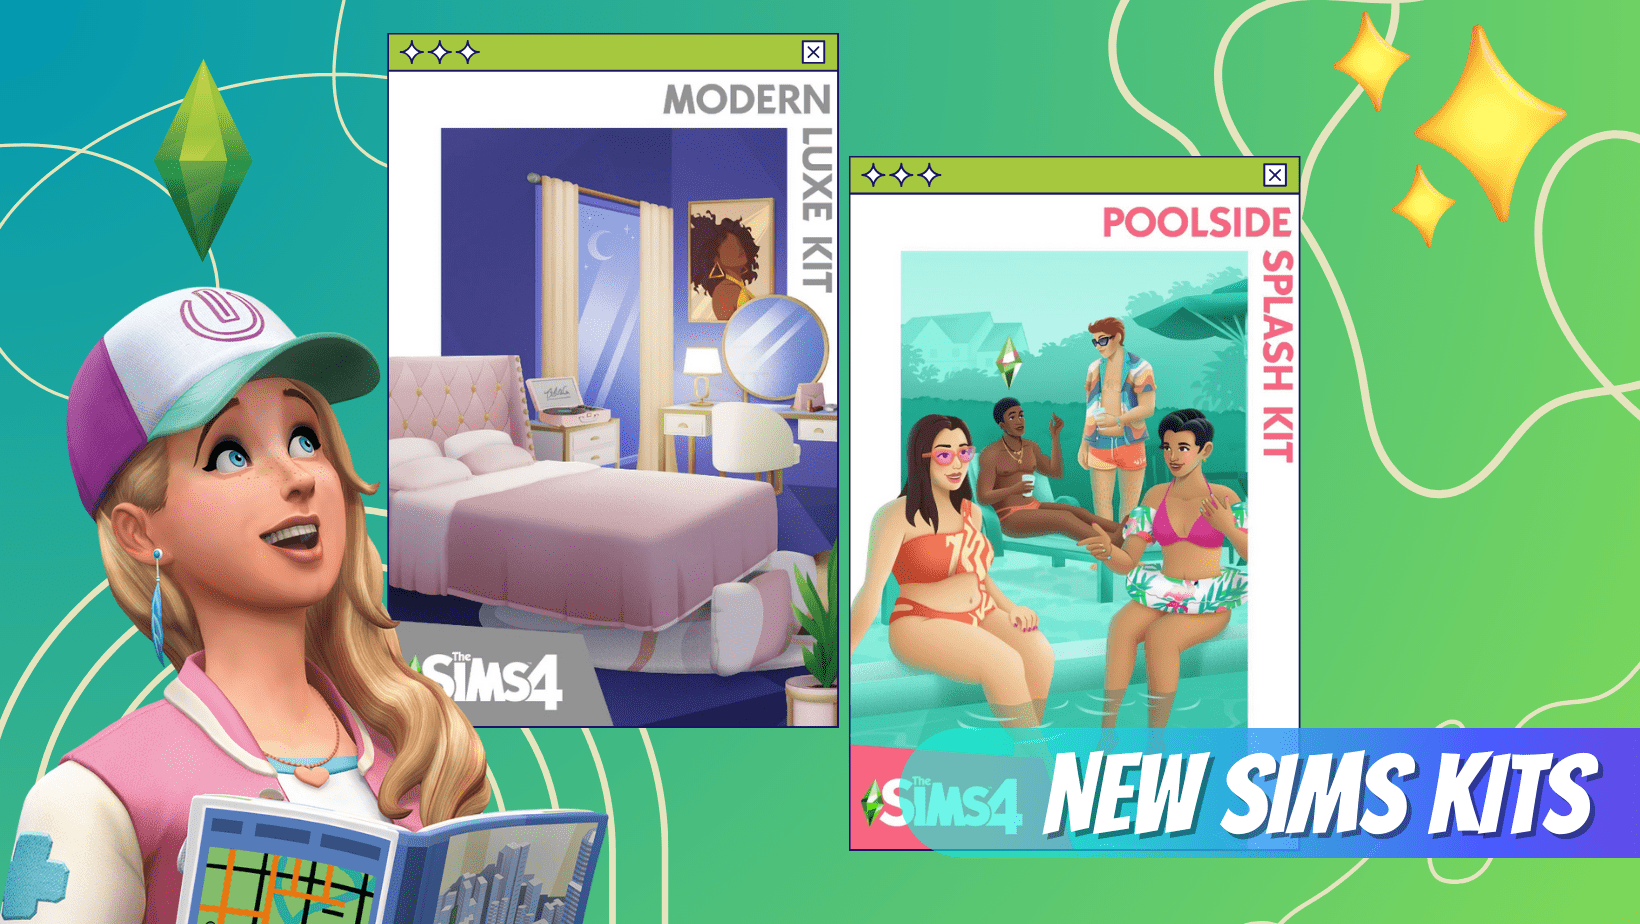 Poolside Splash Kit and Modern Luxe Kit : New Sims 4 Kits